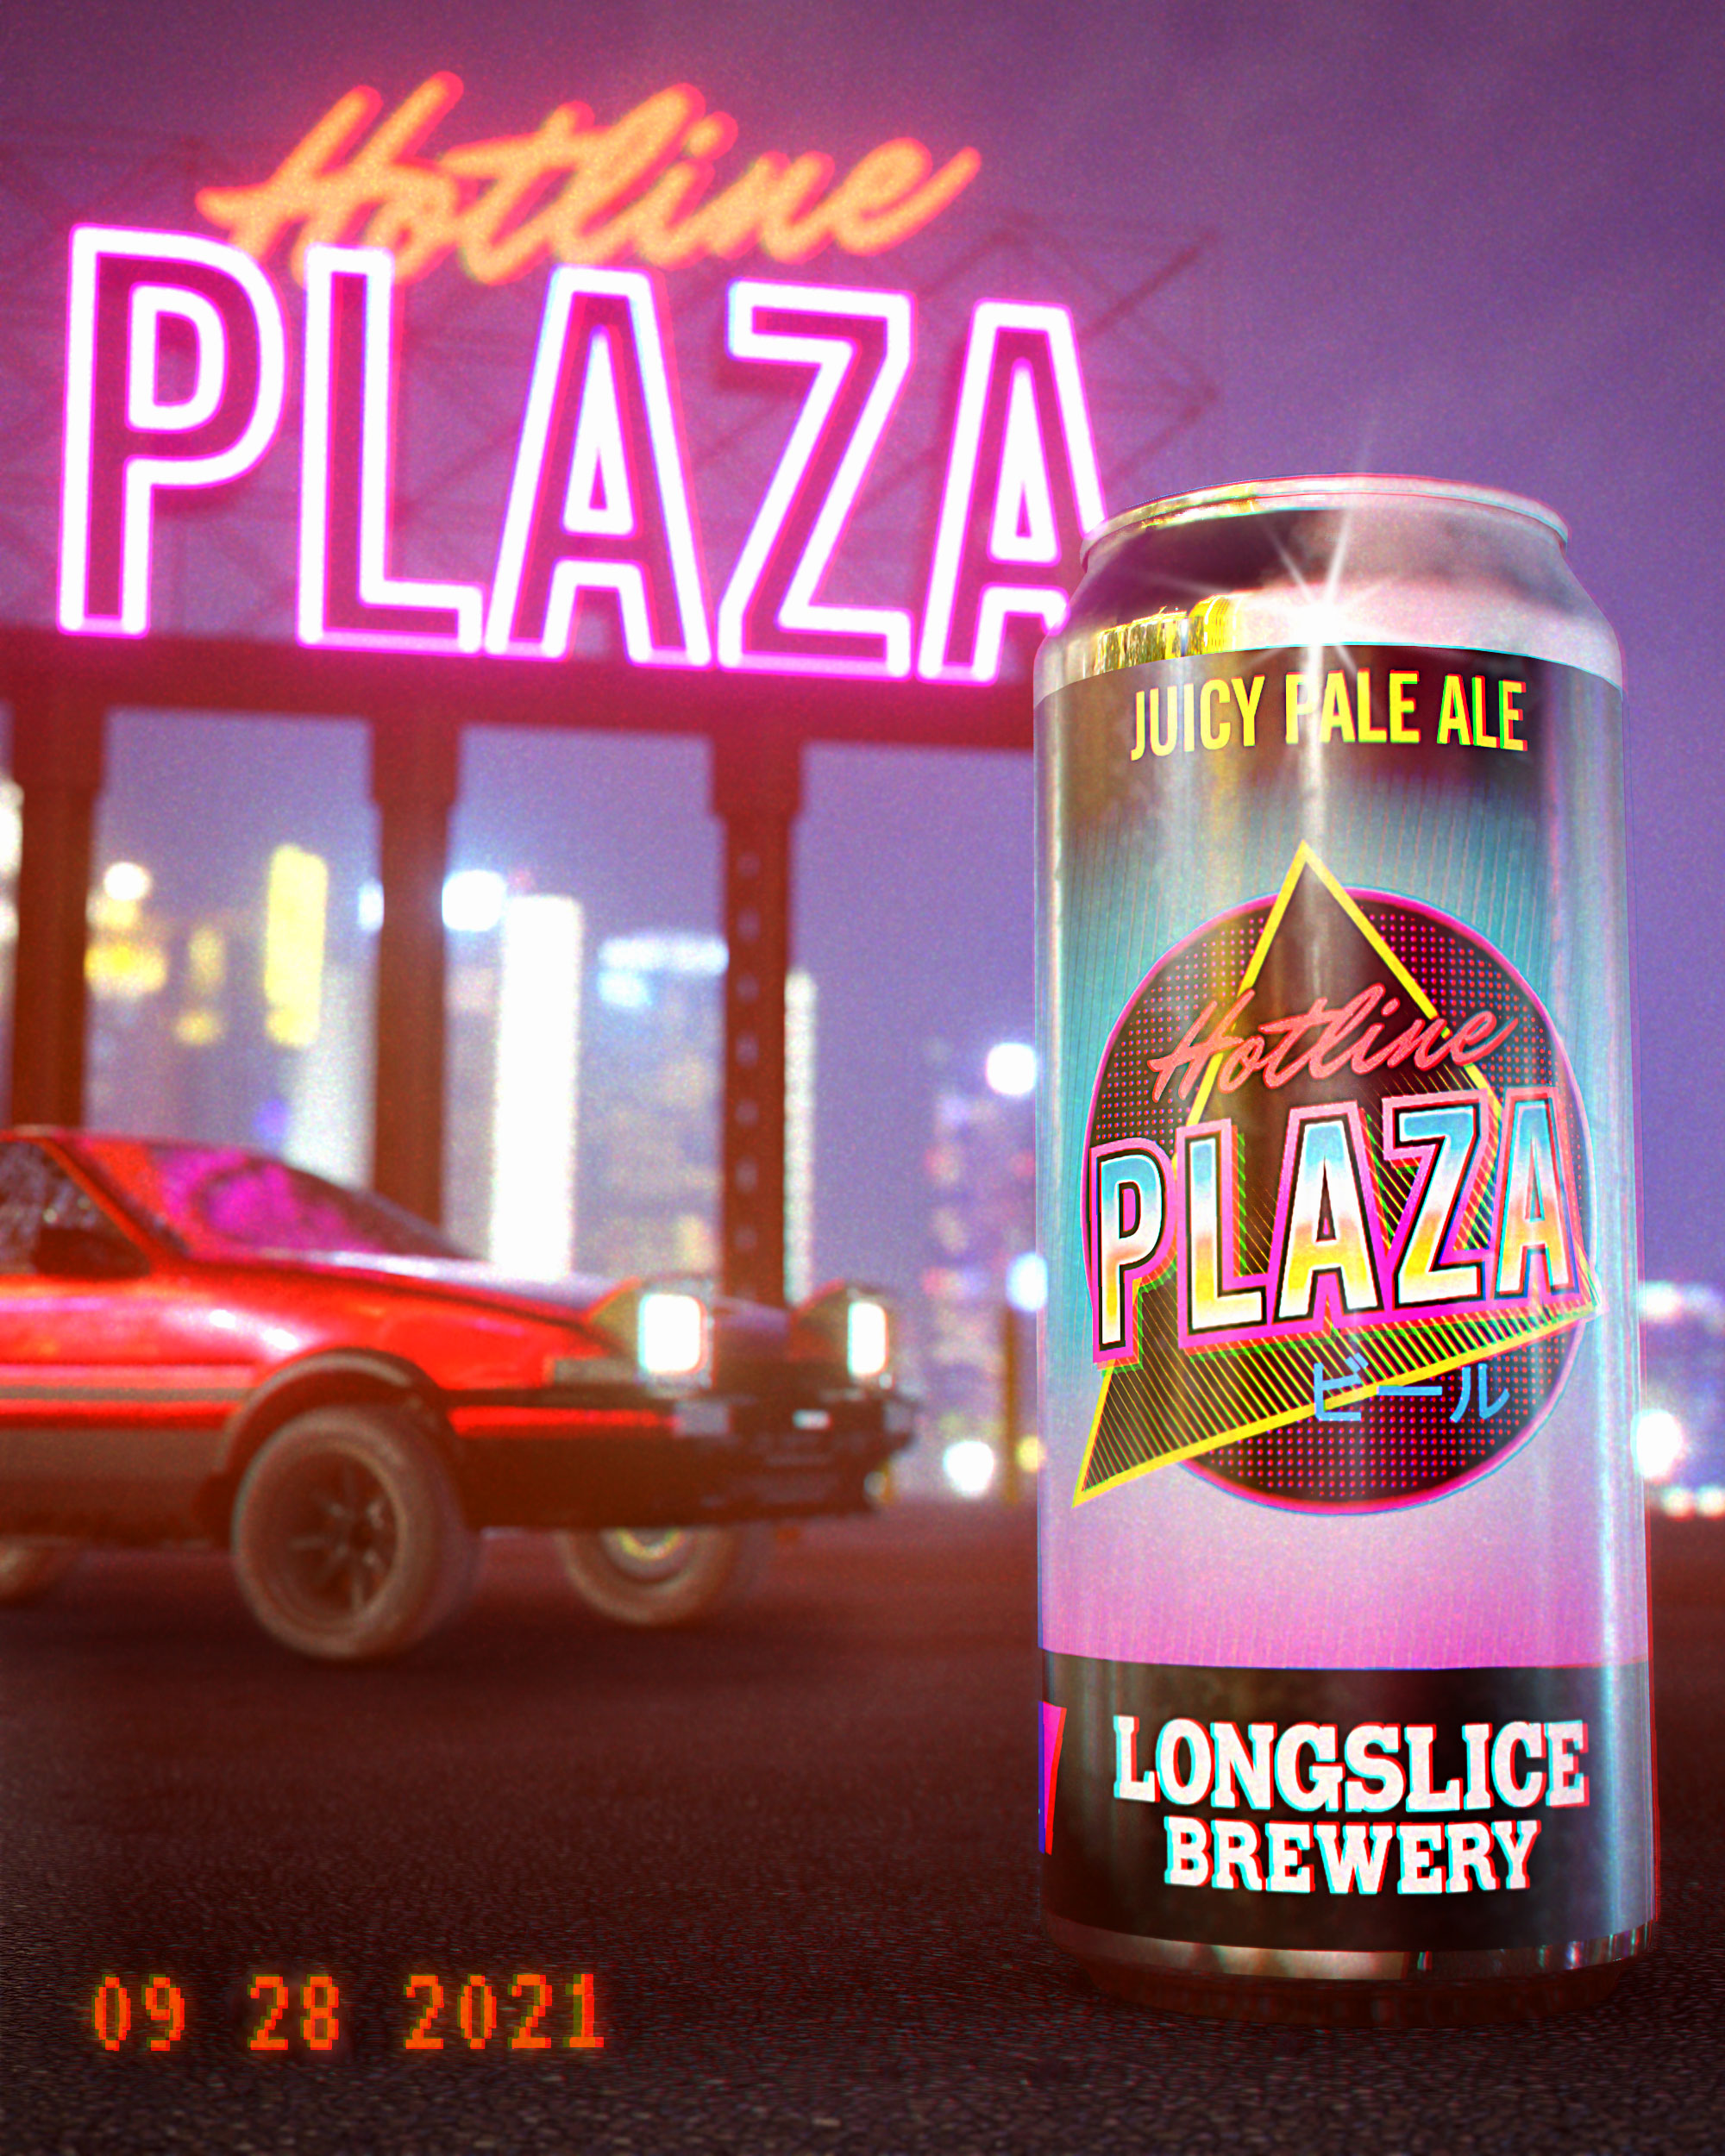 Hotline Plaza juicy pale ale-Outrun